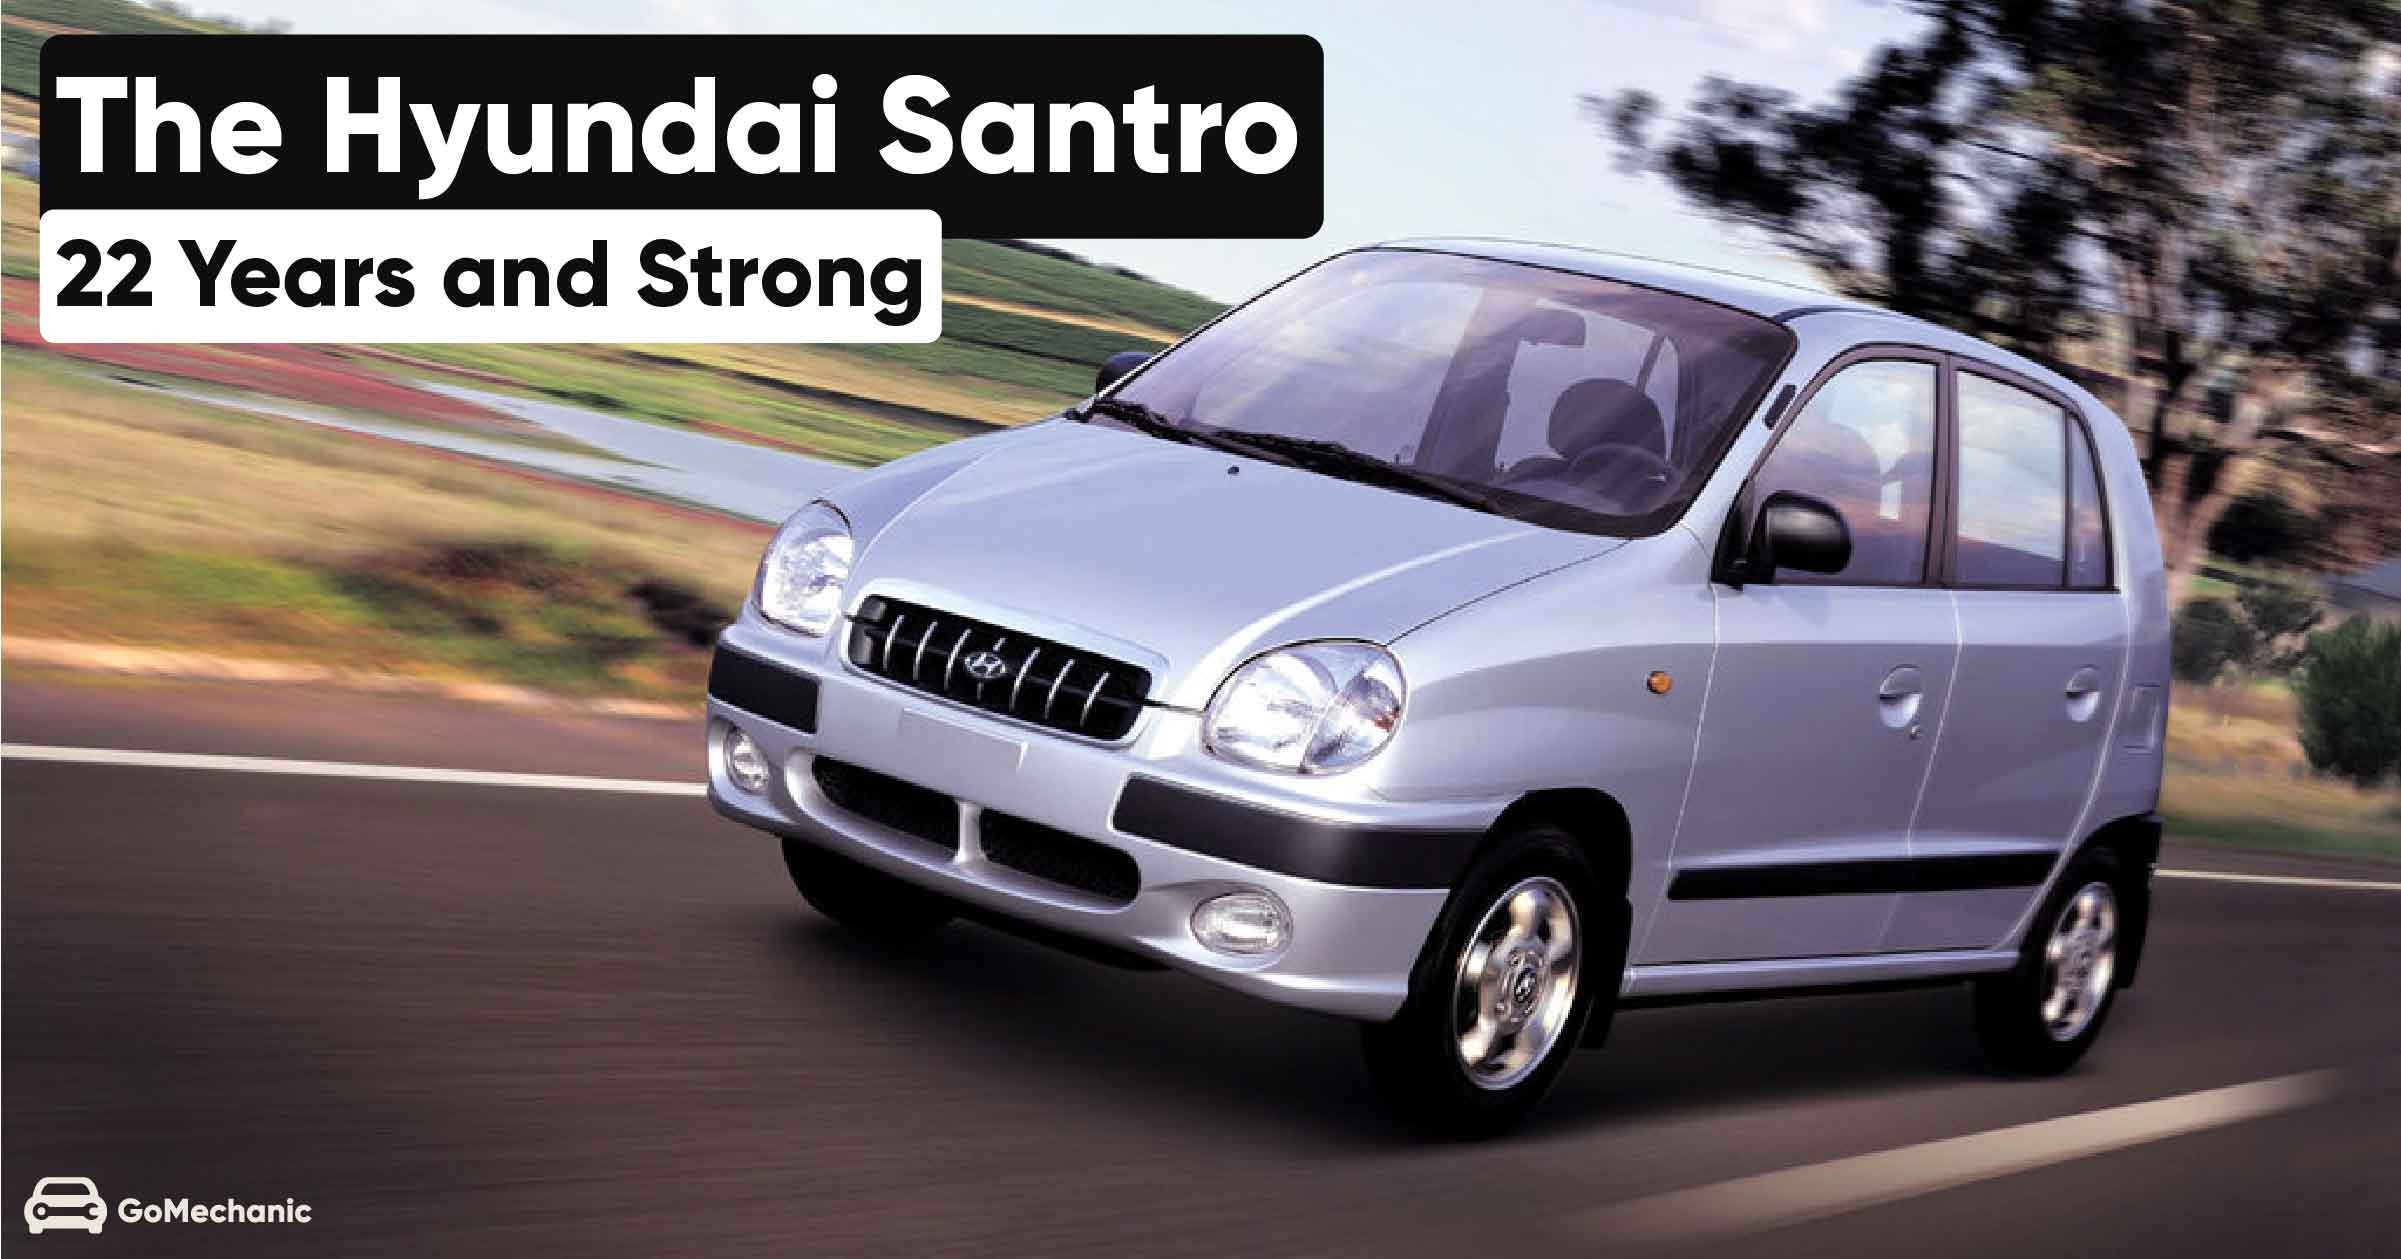 The Hyundai Santro 22 Years and Strong